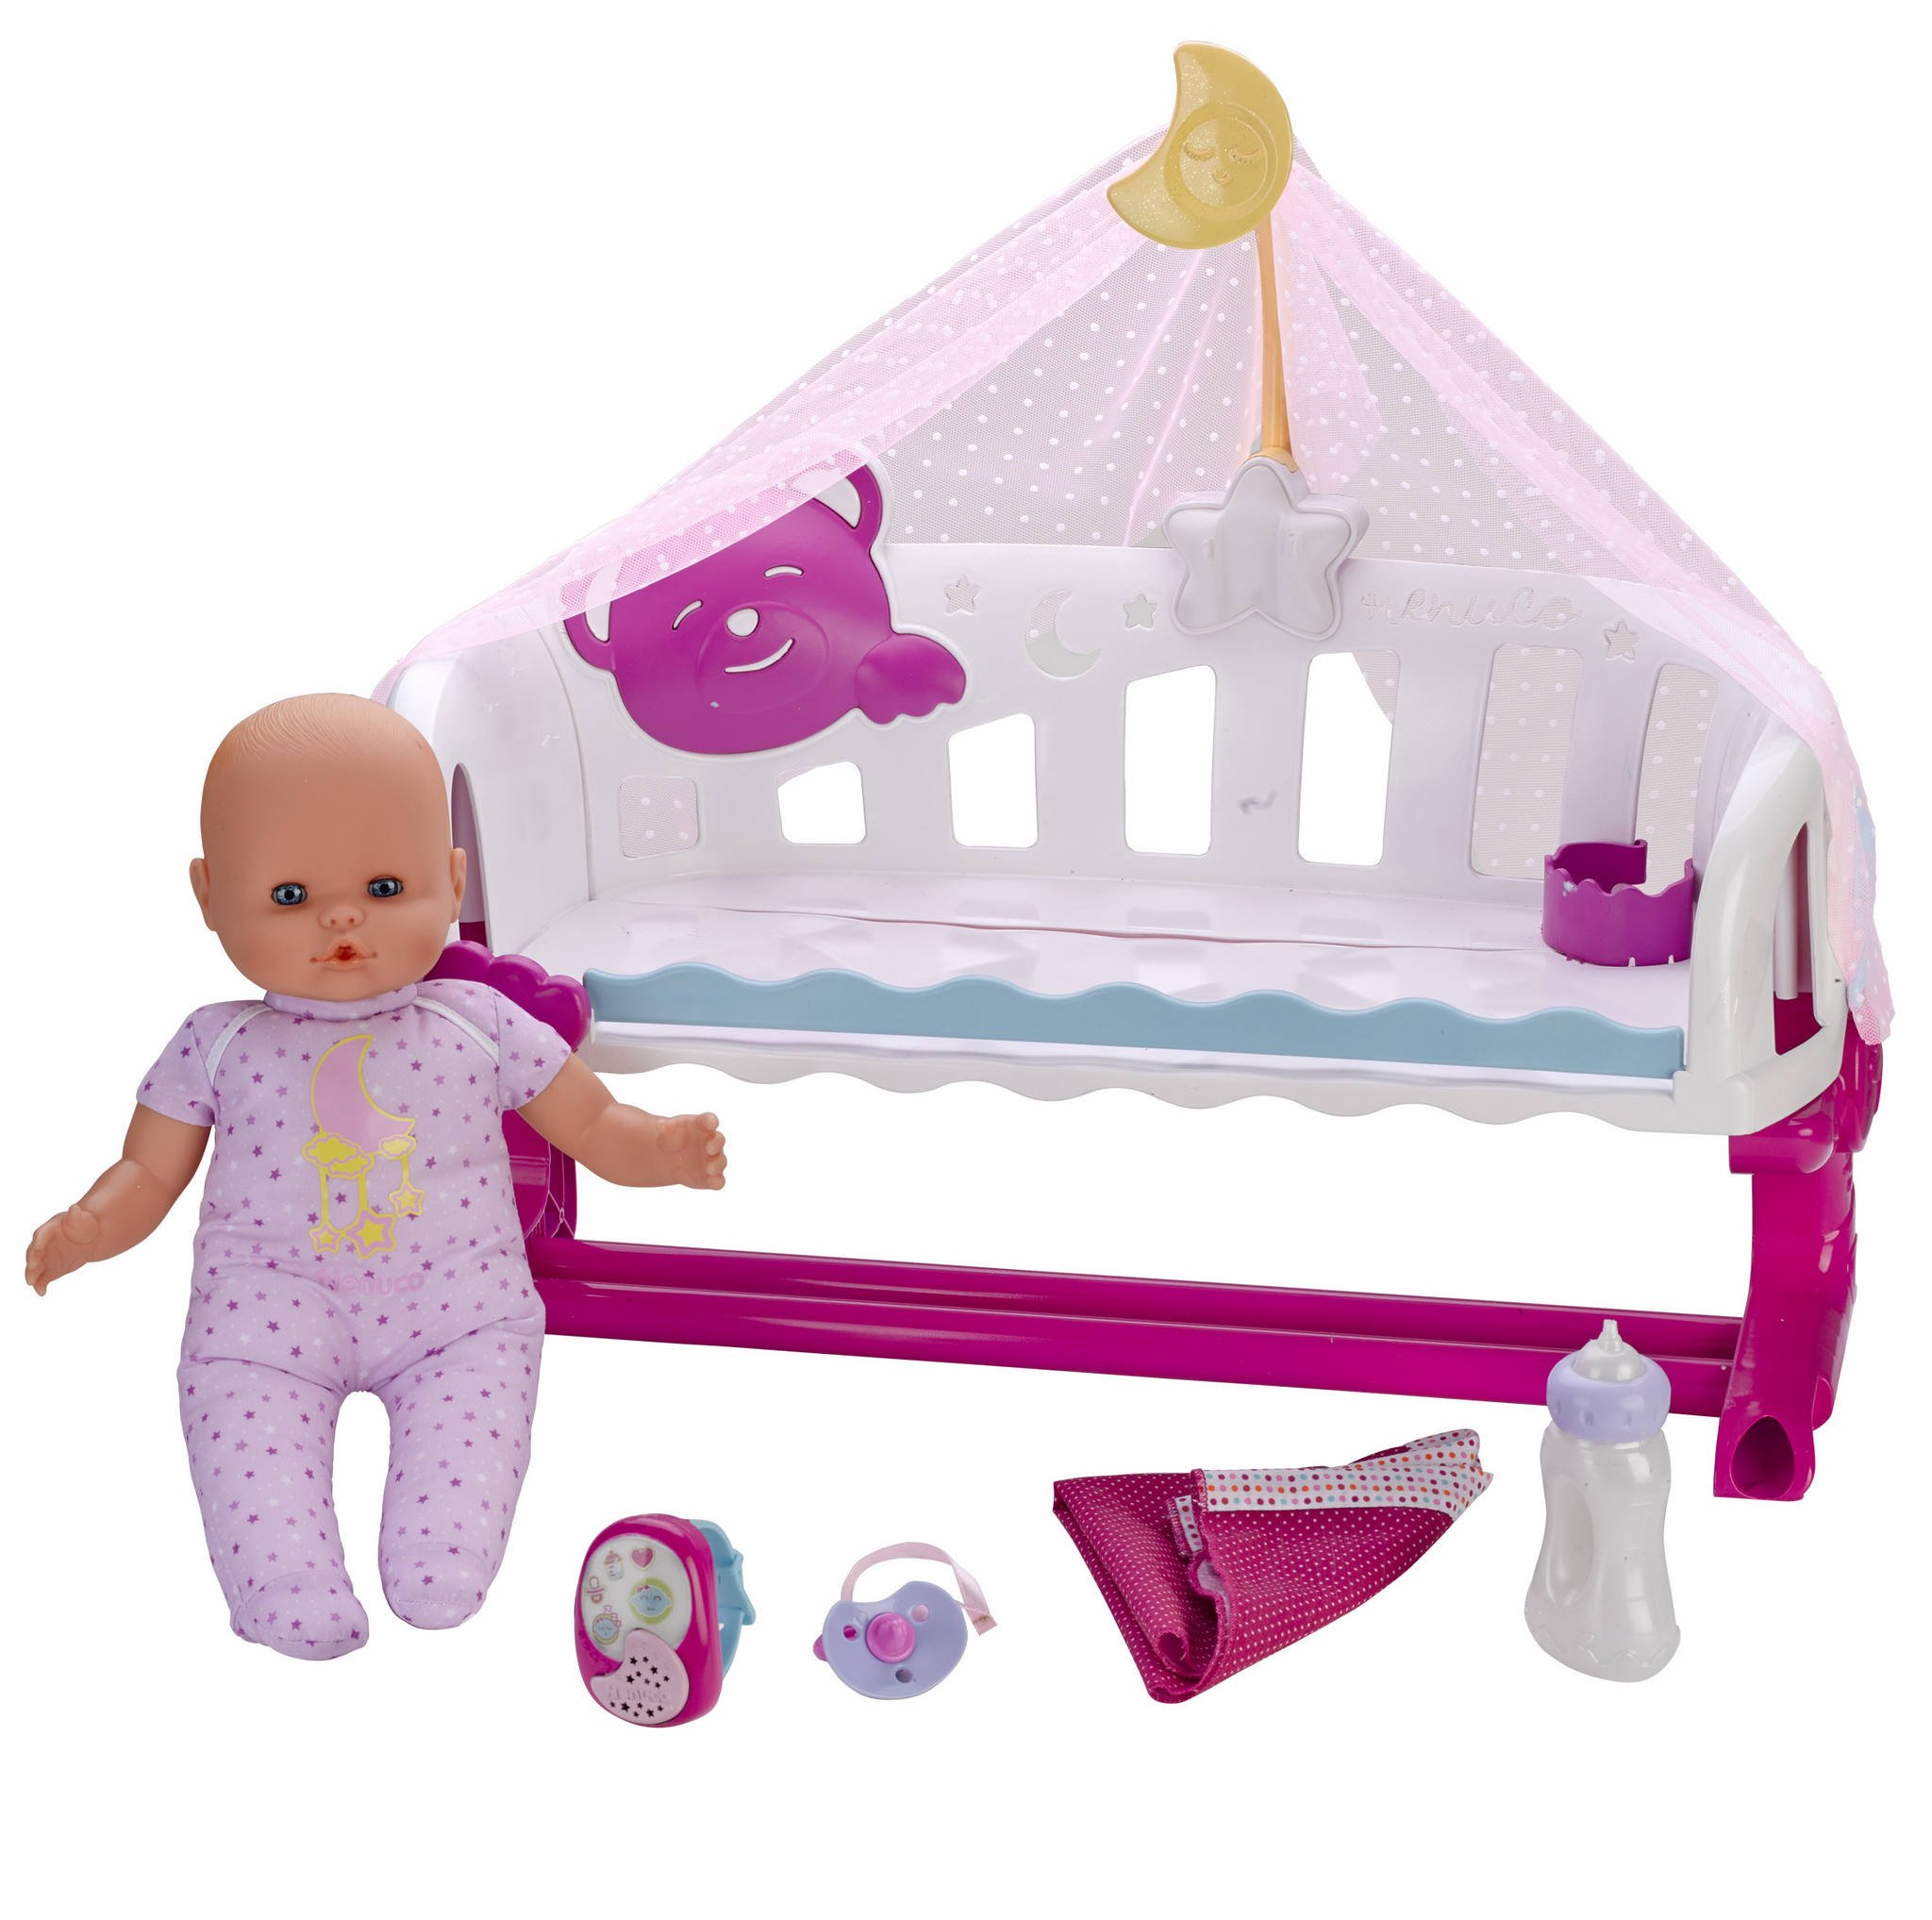 Nenuco by Famosa 700014485 Sleep with Me Cradle with Baby Monitor